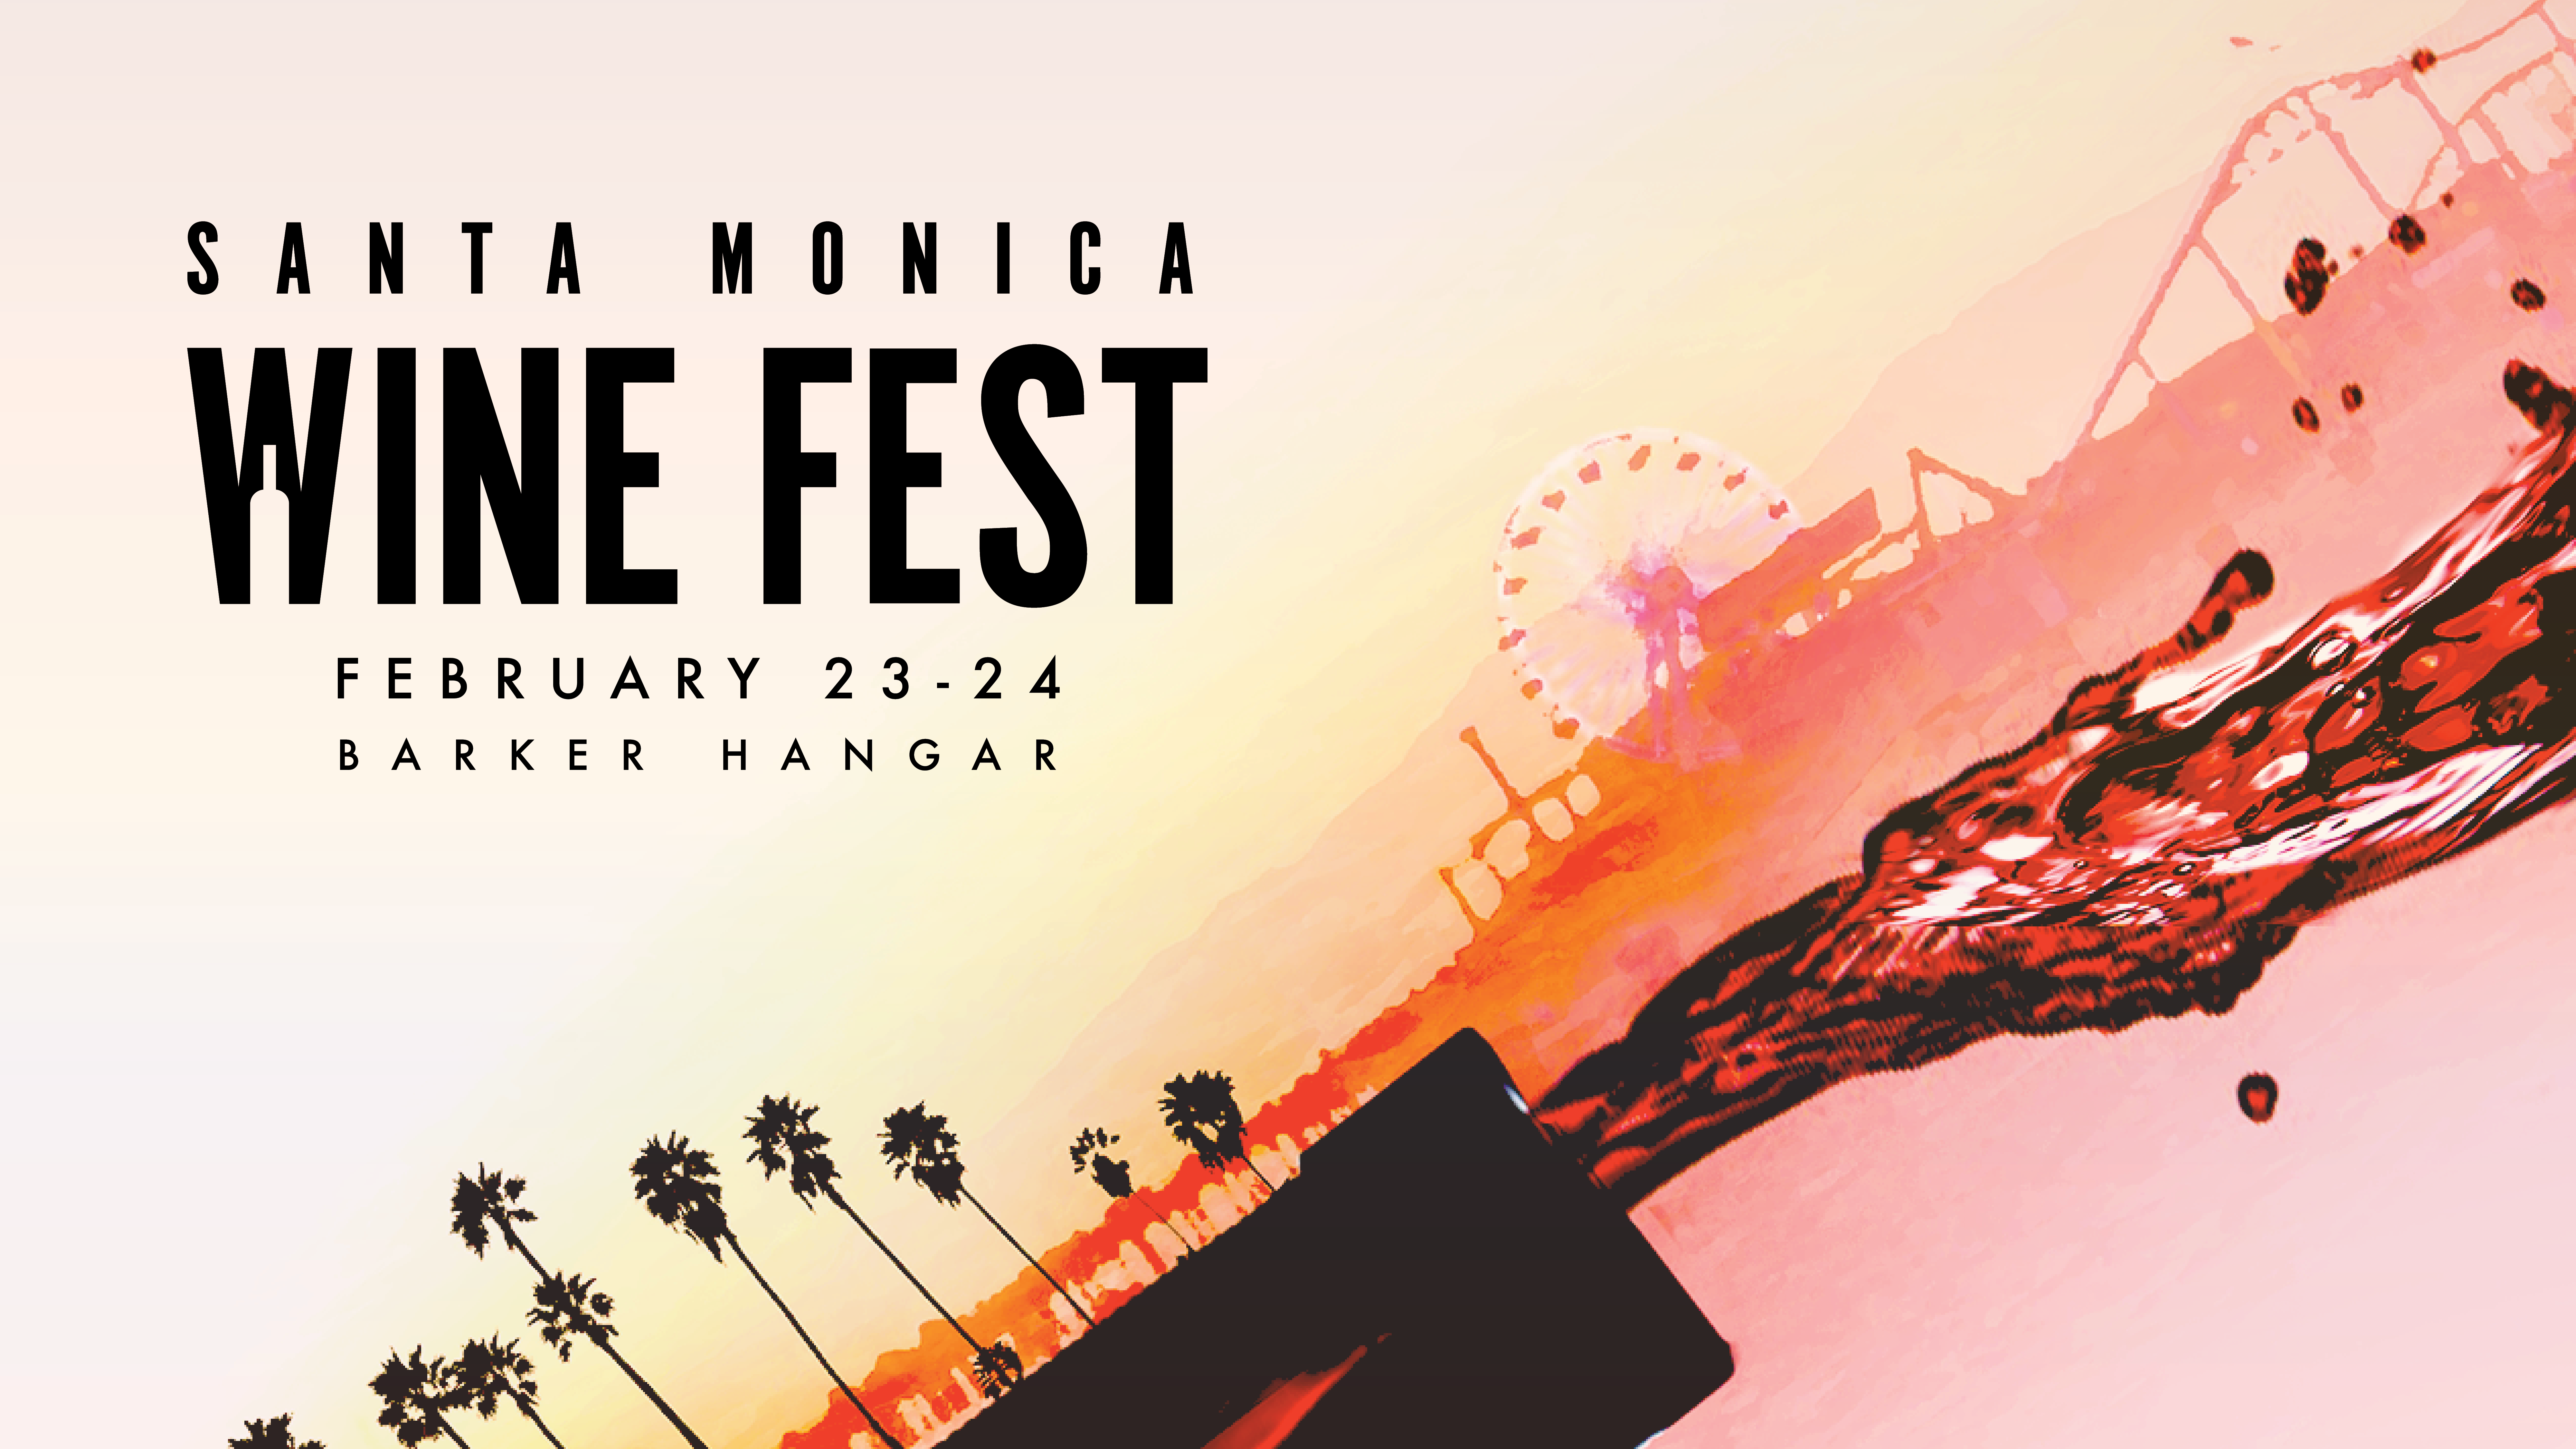 Santa Monica Wine Fest